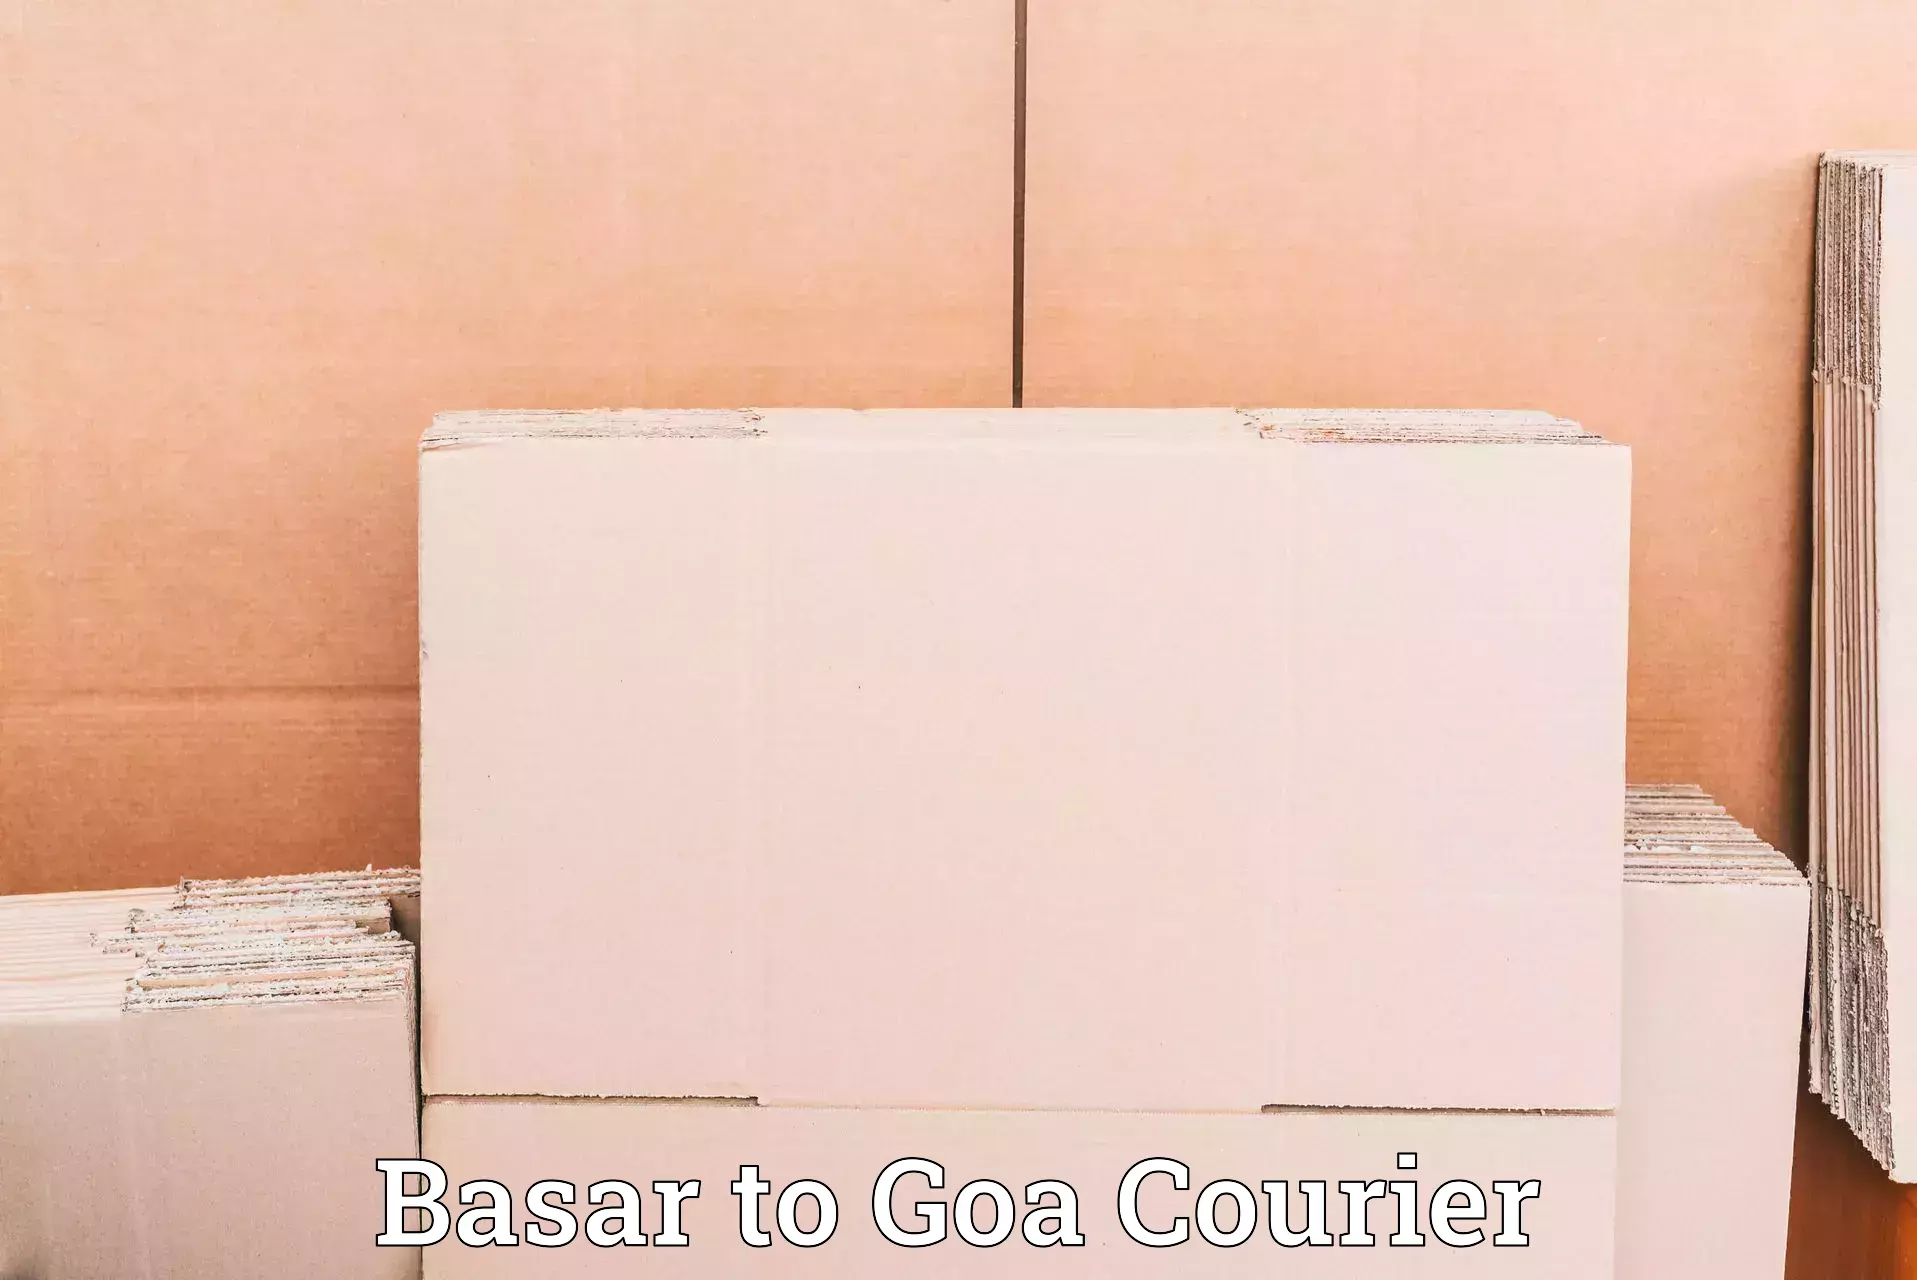 User-friendly courier app Basar to Goa